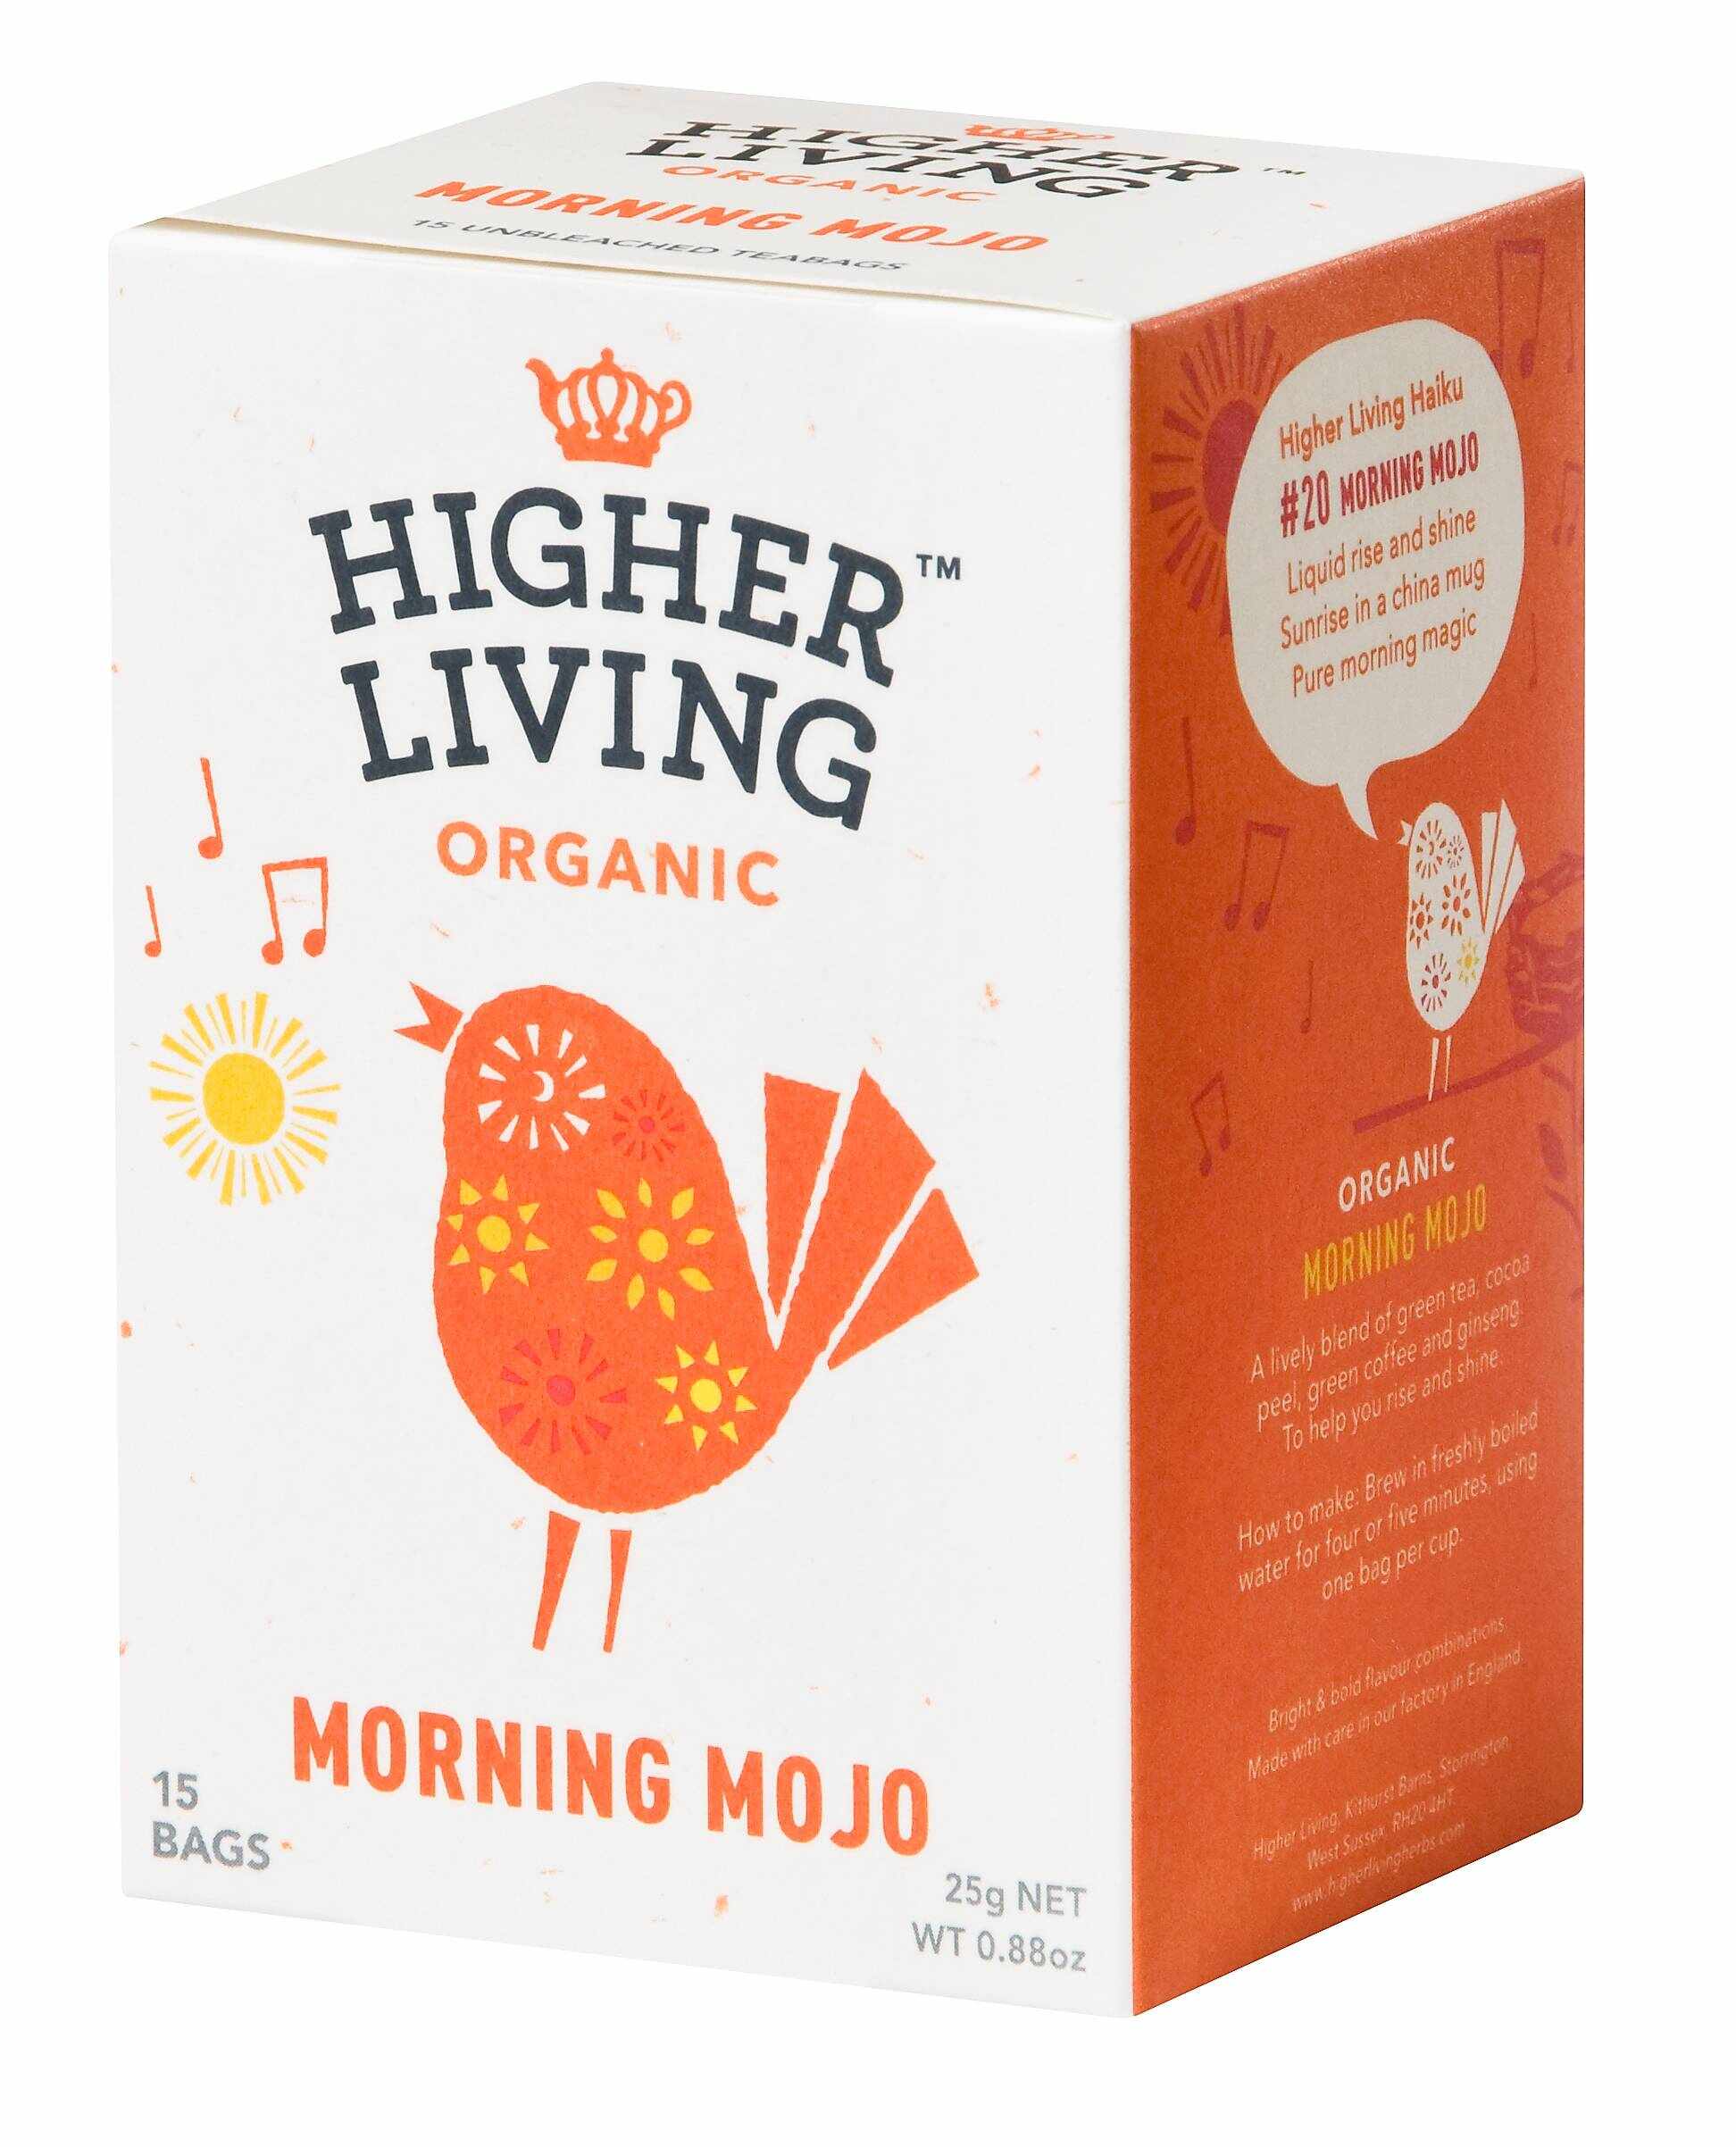 Ceai MORNING MOJO eco-bio, 15 plicuri, Higher Living